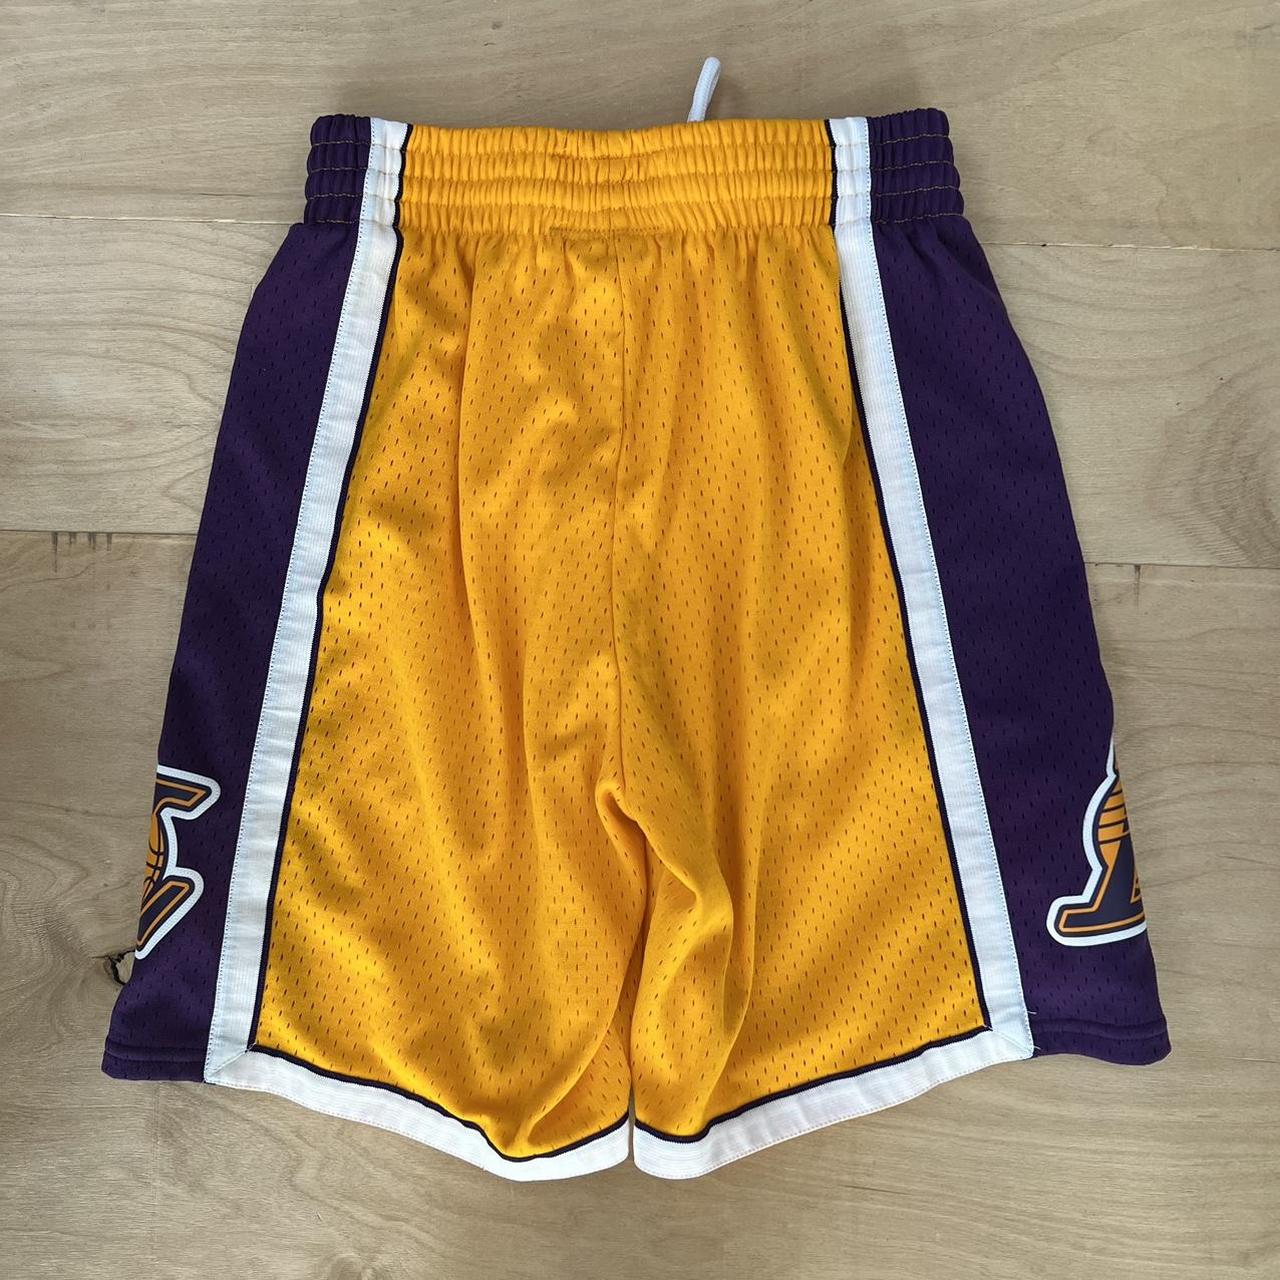 yellow LAKERS NBA basketball shorts!! 🏀 super cute, - Depop